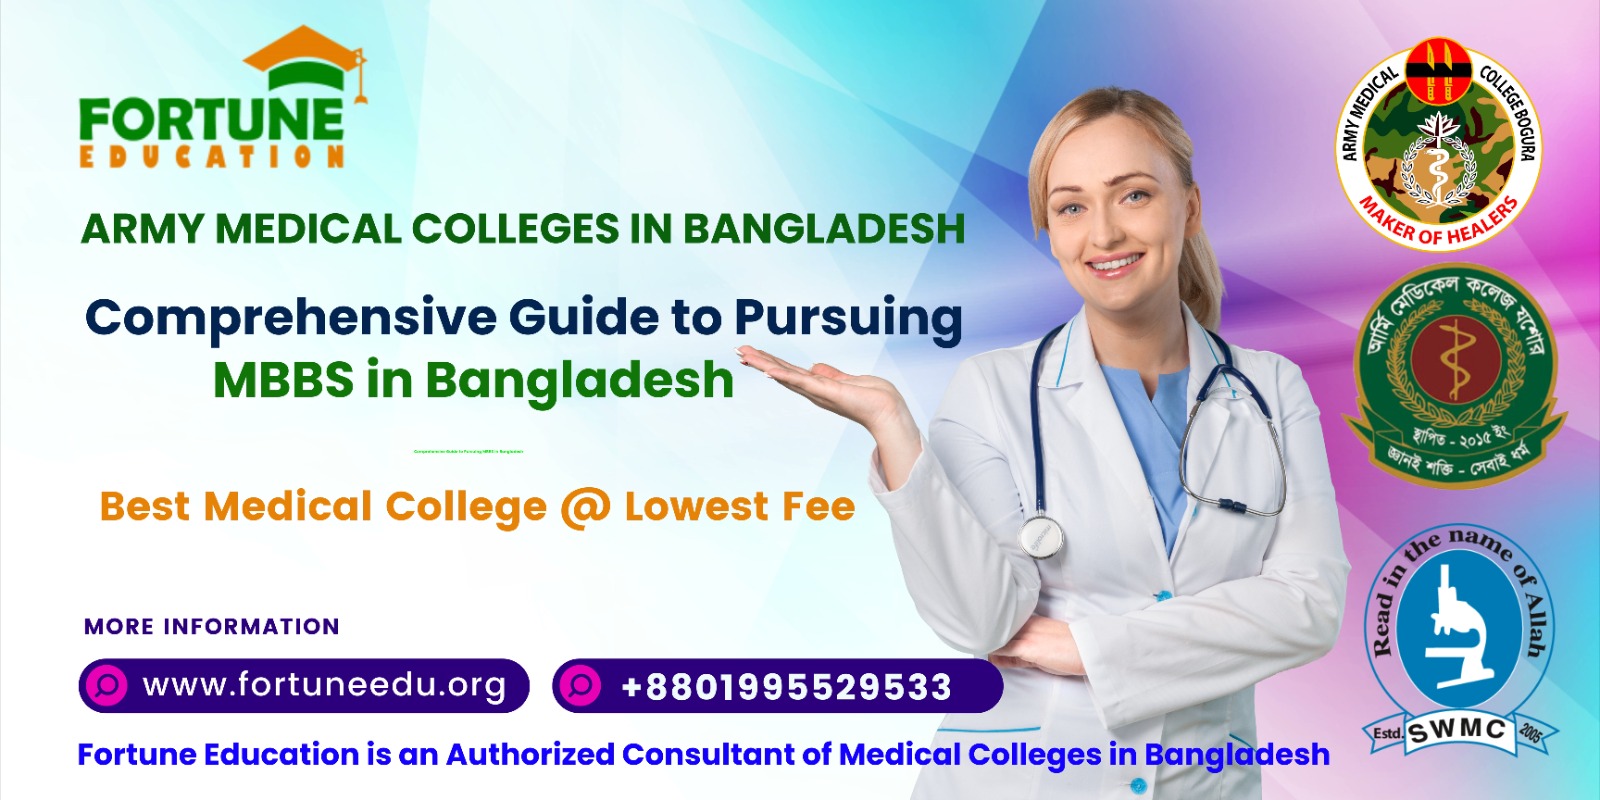 Chittagong Medical University